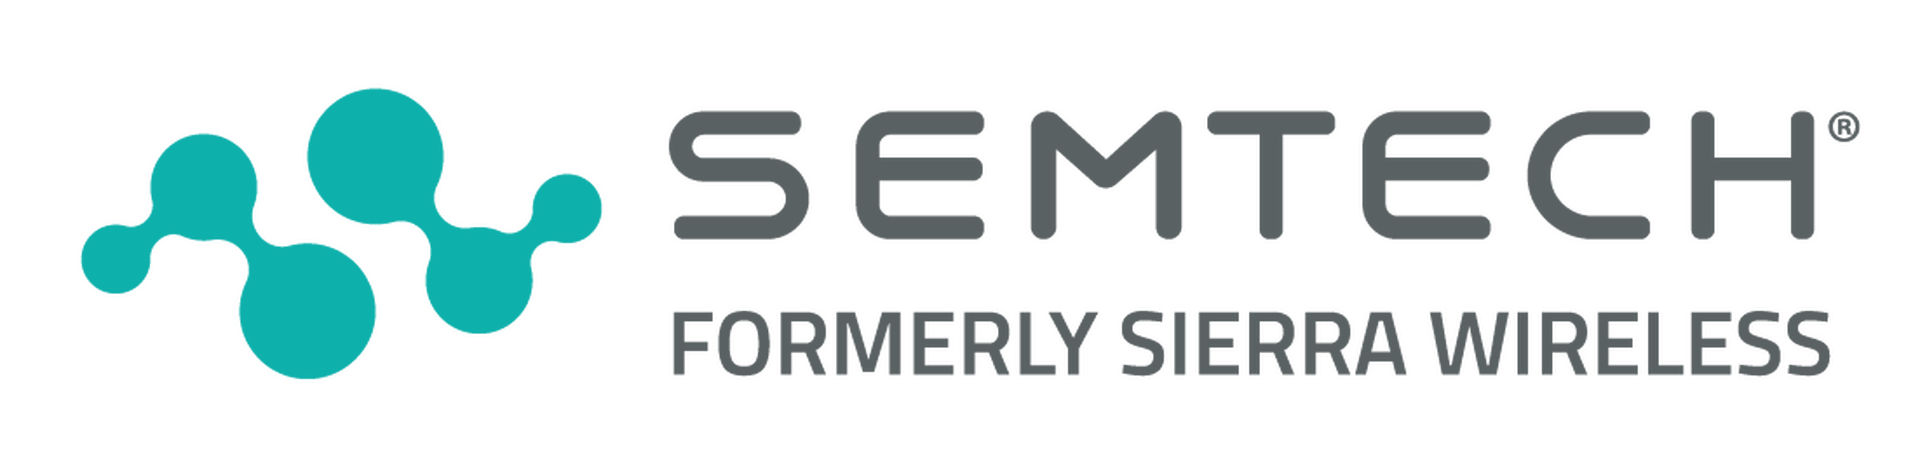 SEMTECH R 326 formerly SW Logo F Horizontal